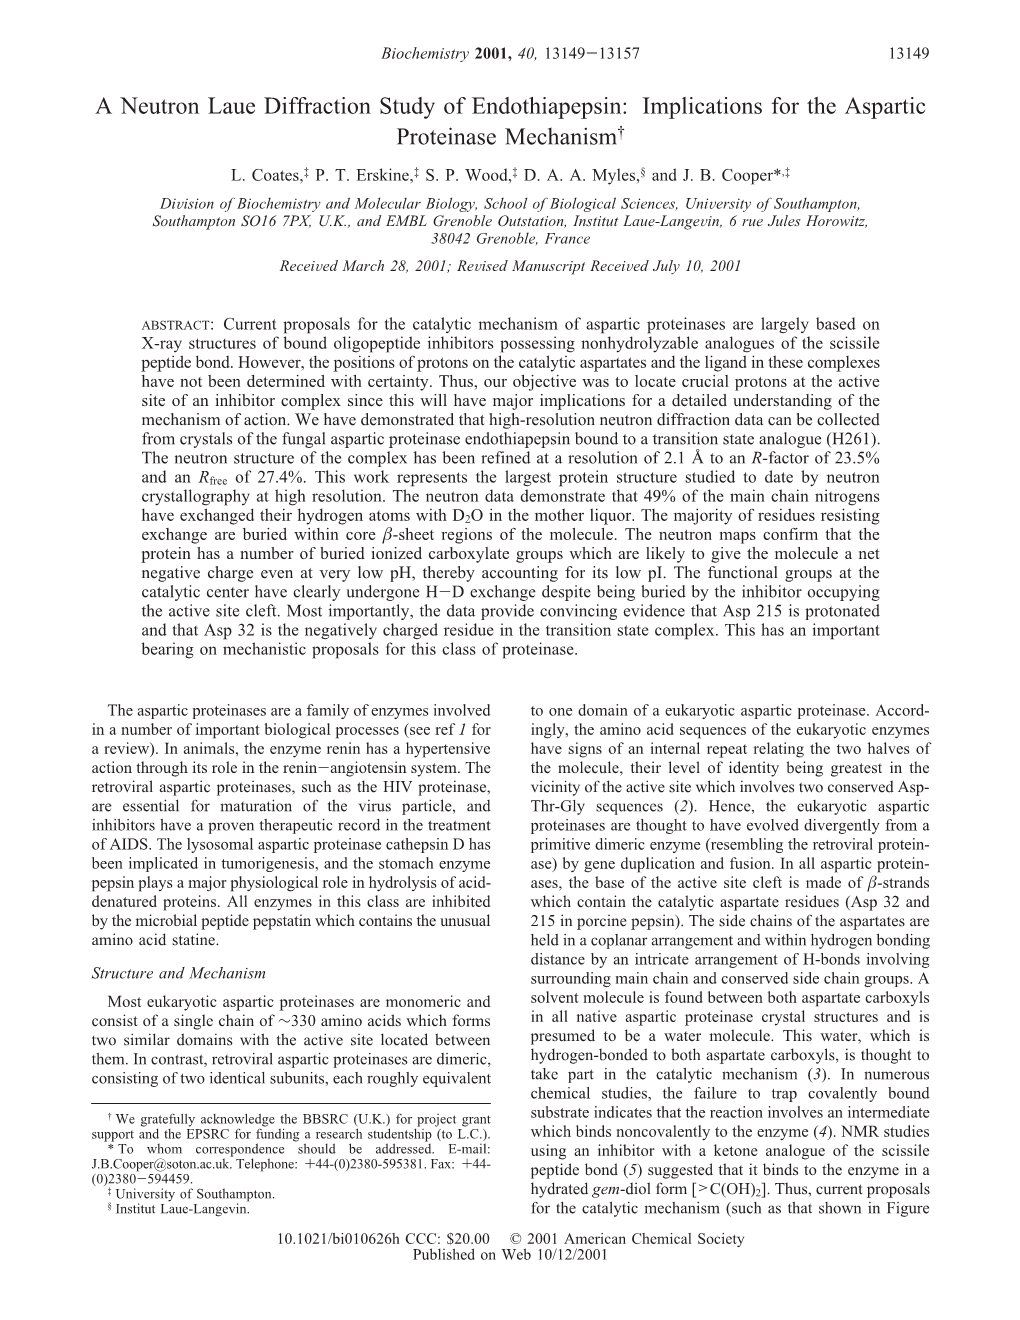 A Neutron Laue Diffraction Study of Endothiapepsin: Implications for the Aspartic Proteinase Mechanism† L